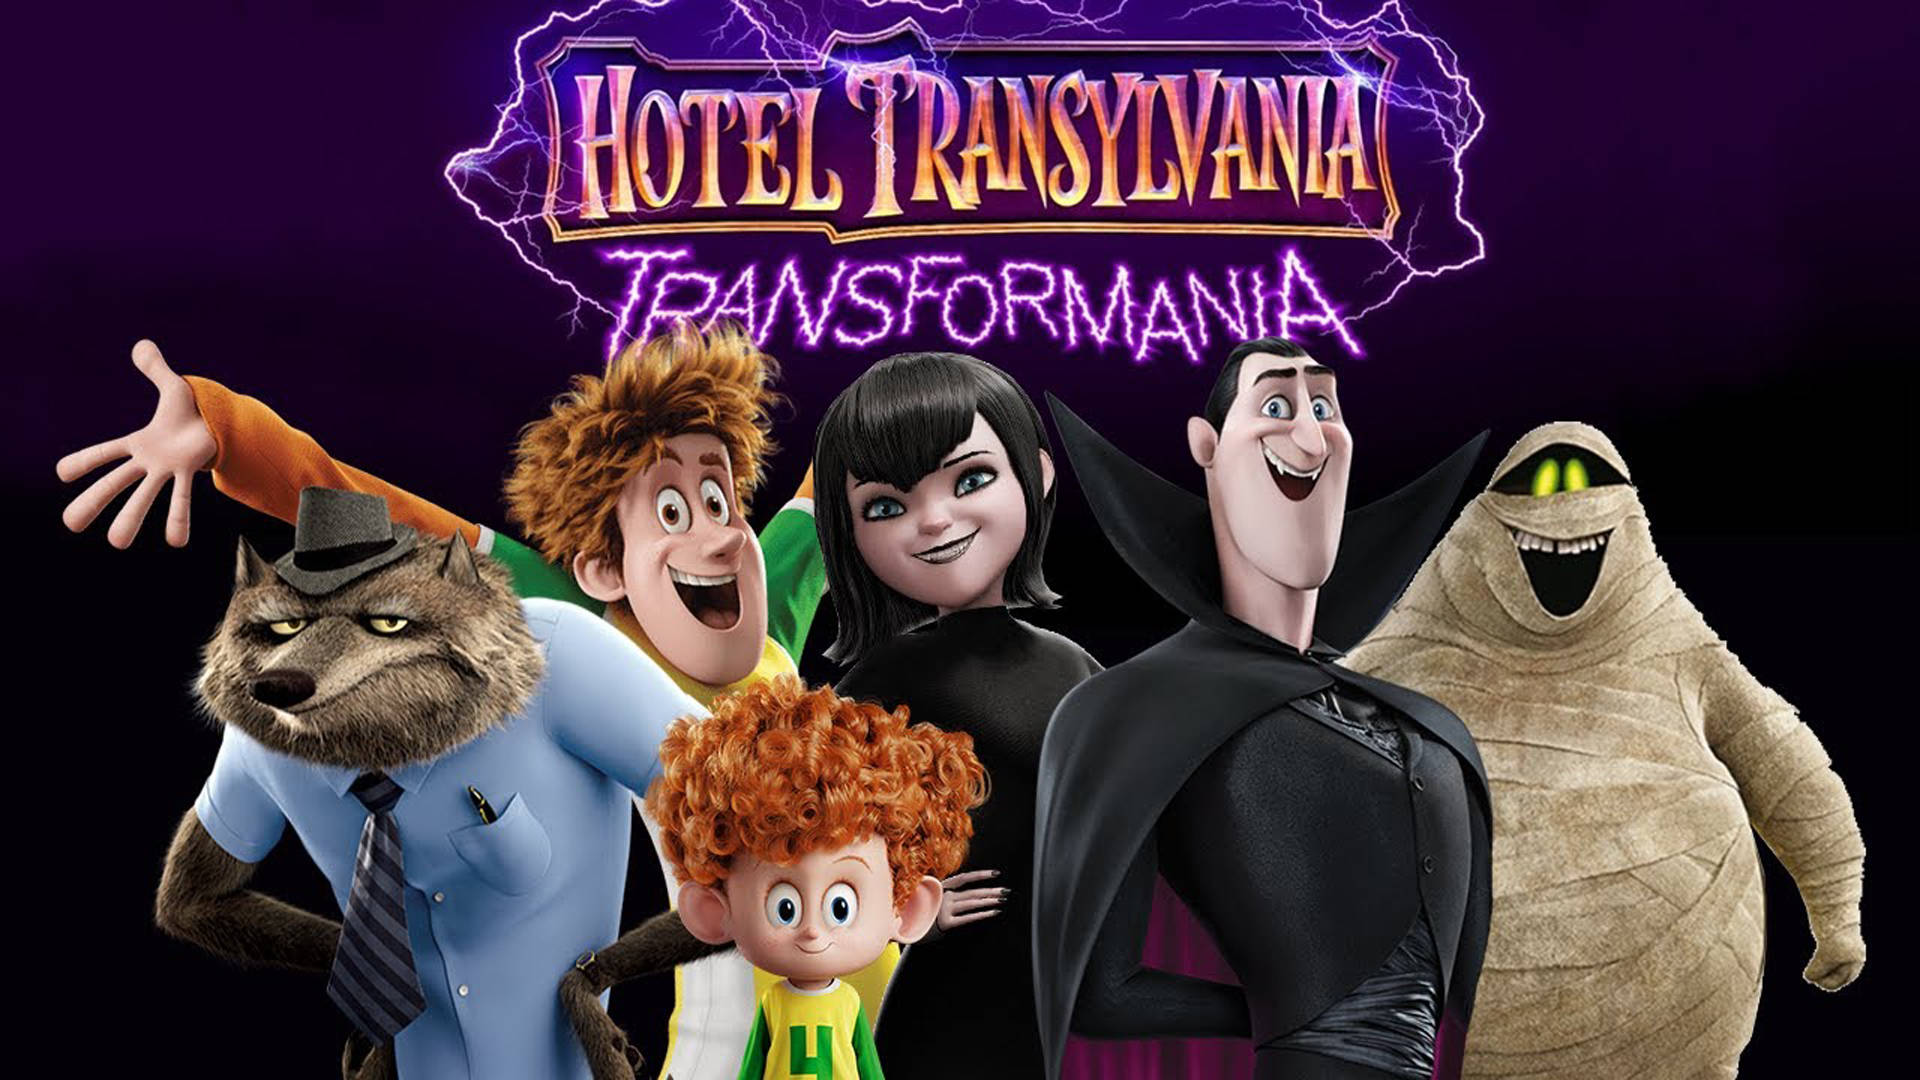 Hoteltransylvania: Transformania Filmaffisch. Wallpaper